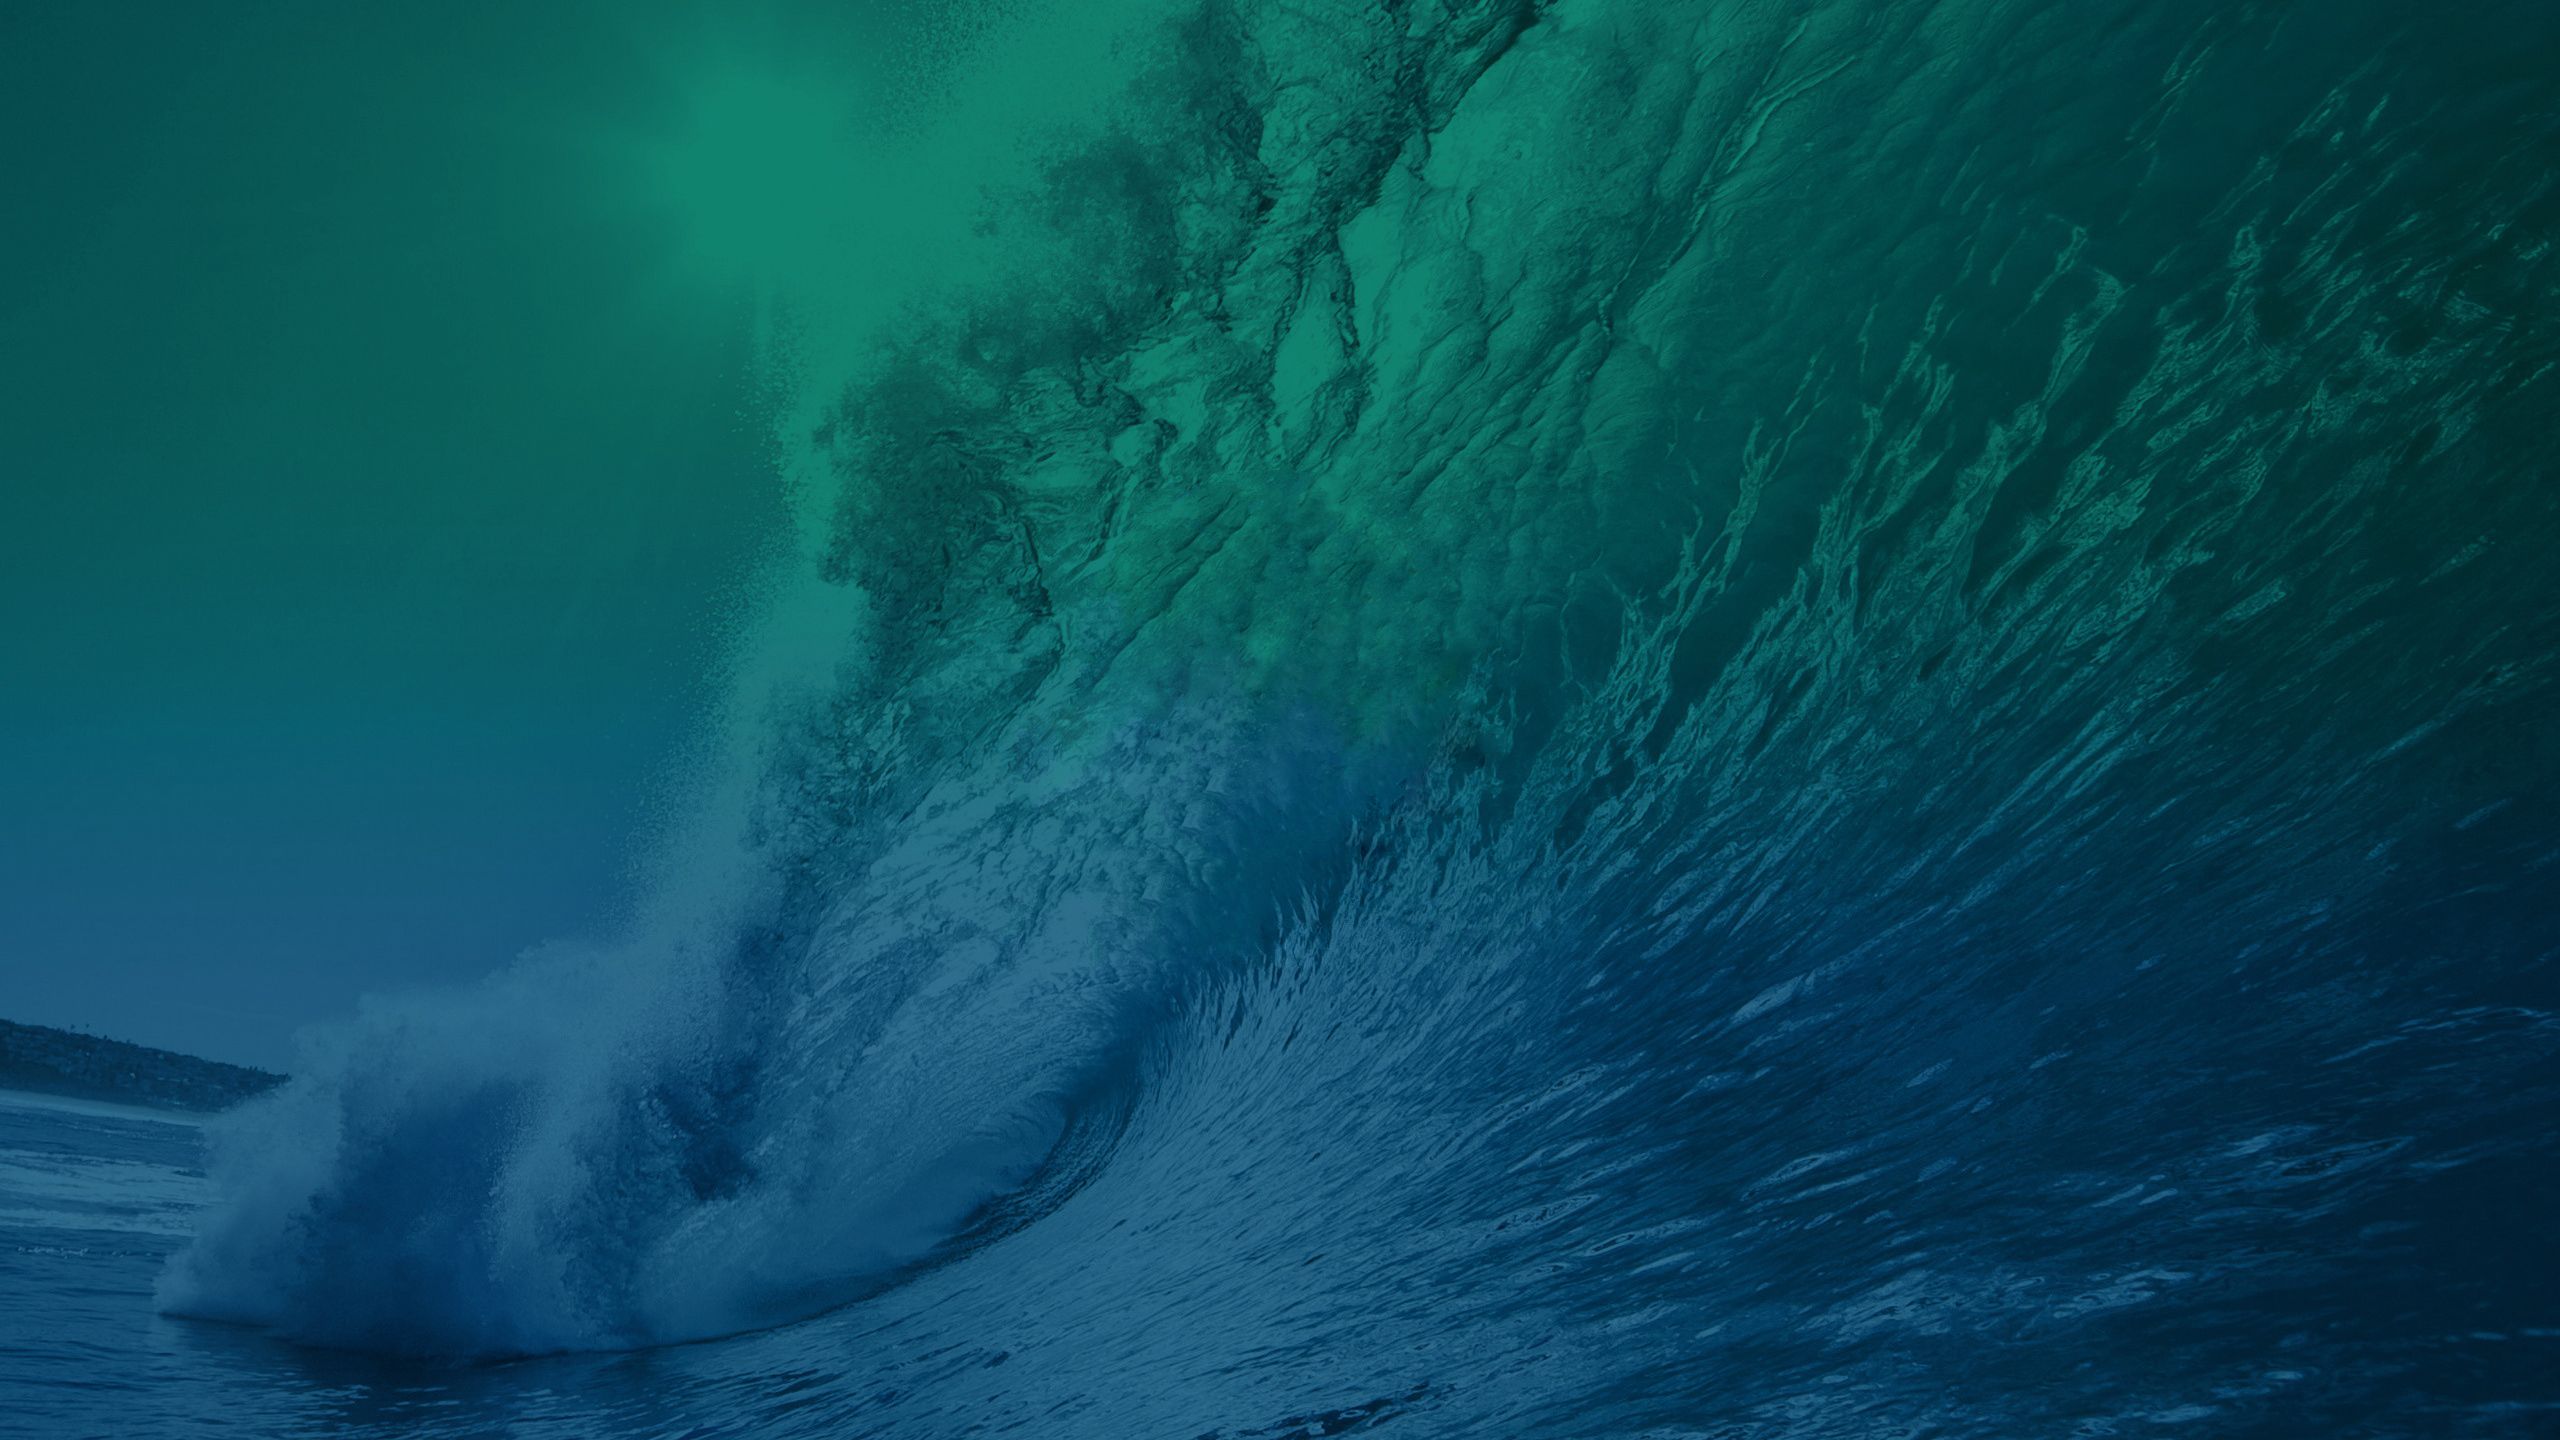 Desktop - Wallpaper Request - OS X Mavericks | MacRumors Forums